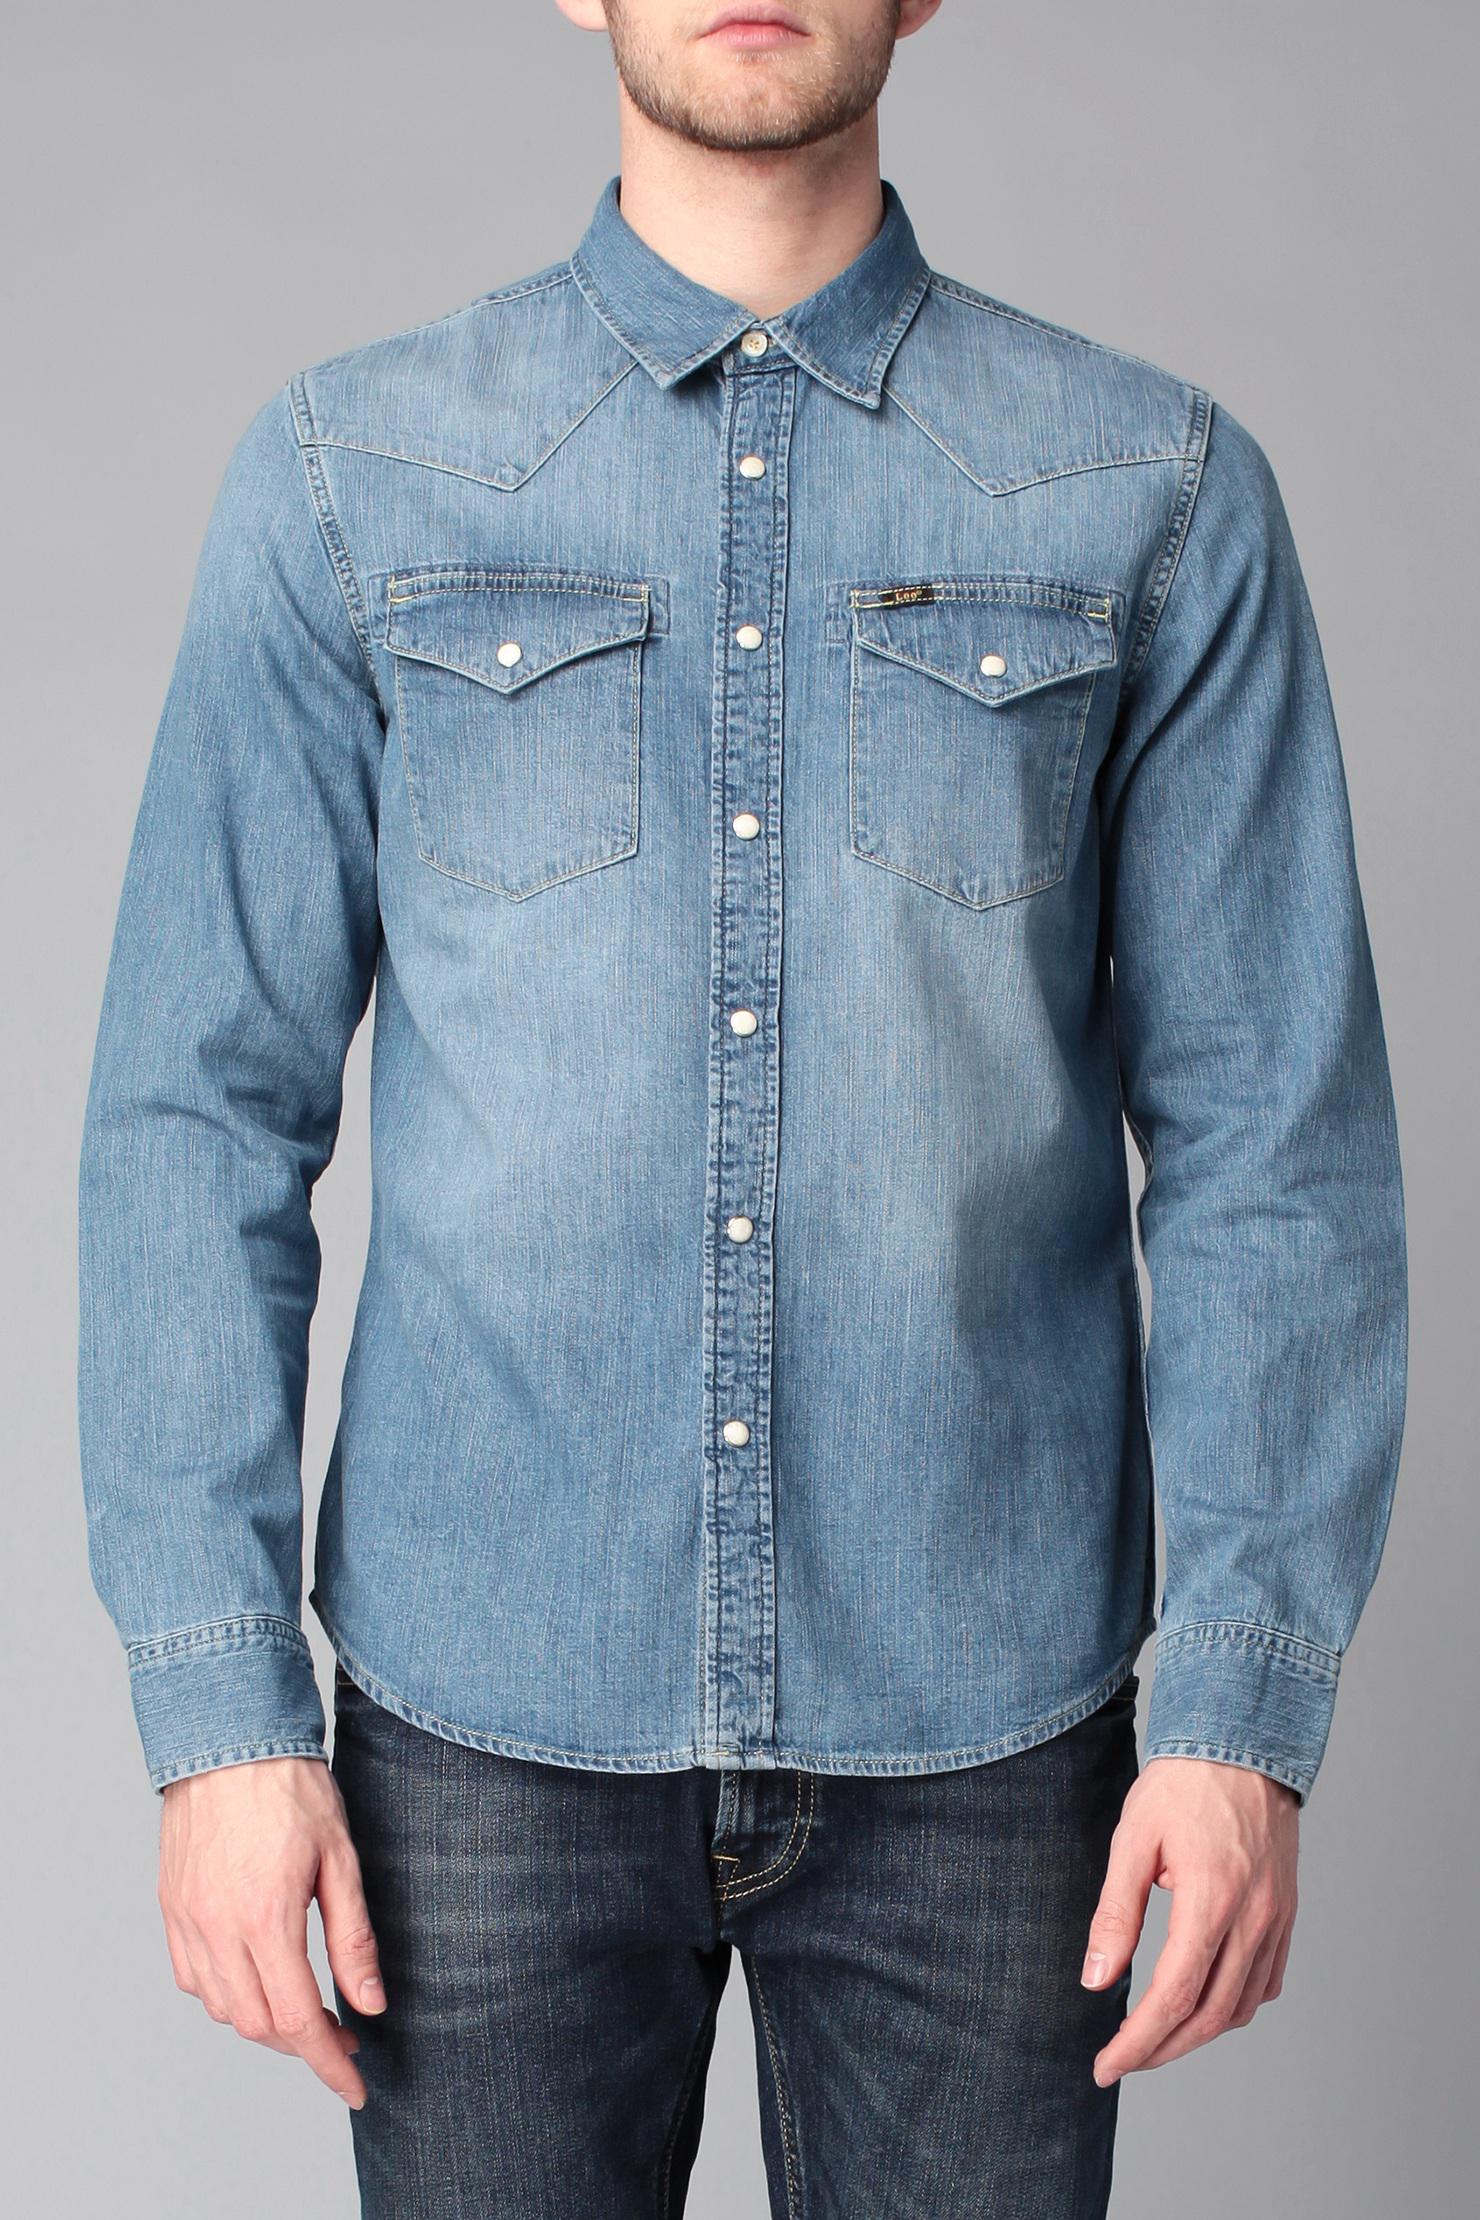 Lyst - Lee Jeans Long Sve Shirt in Blue for Men